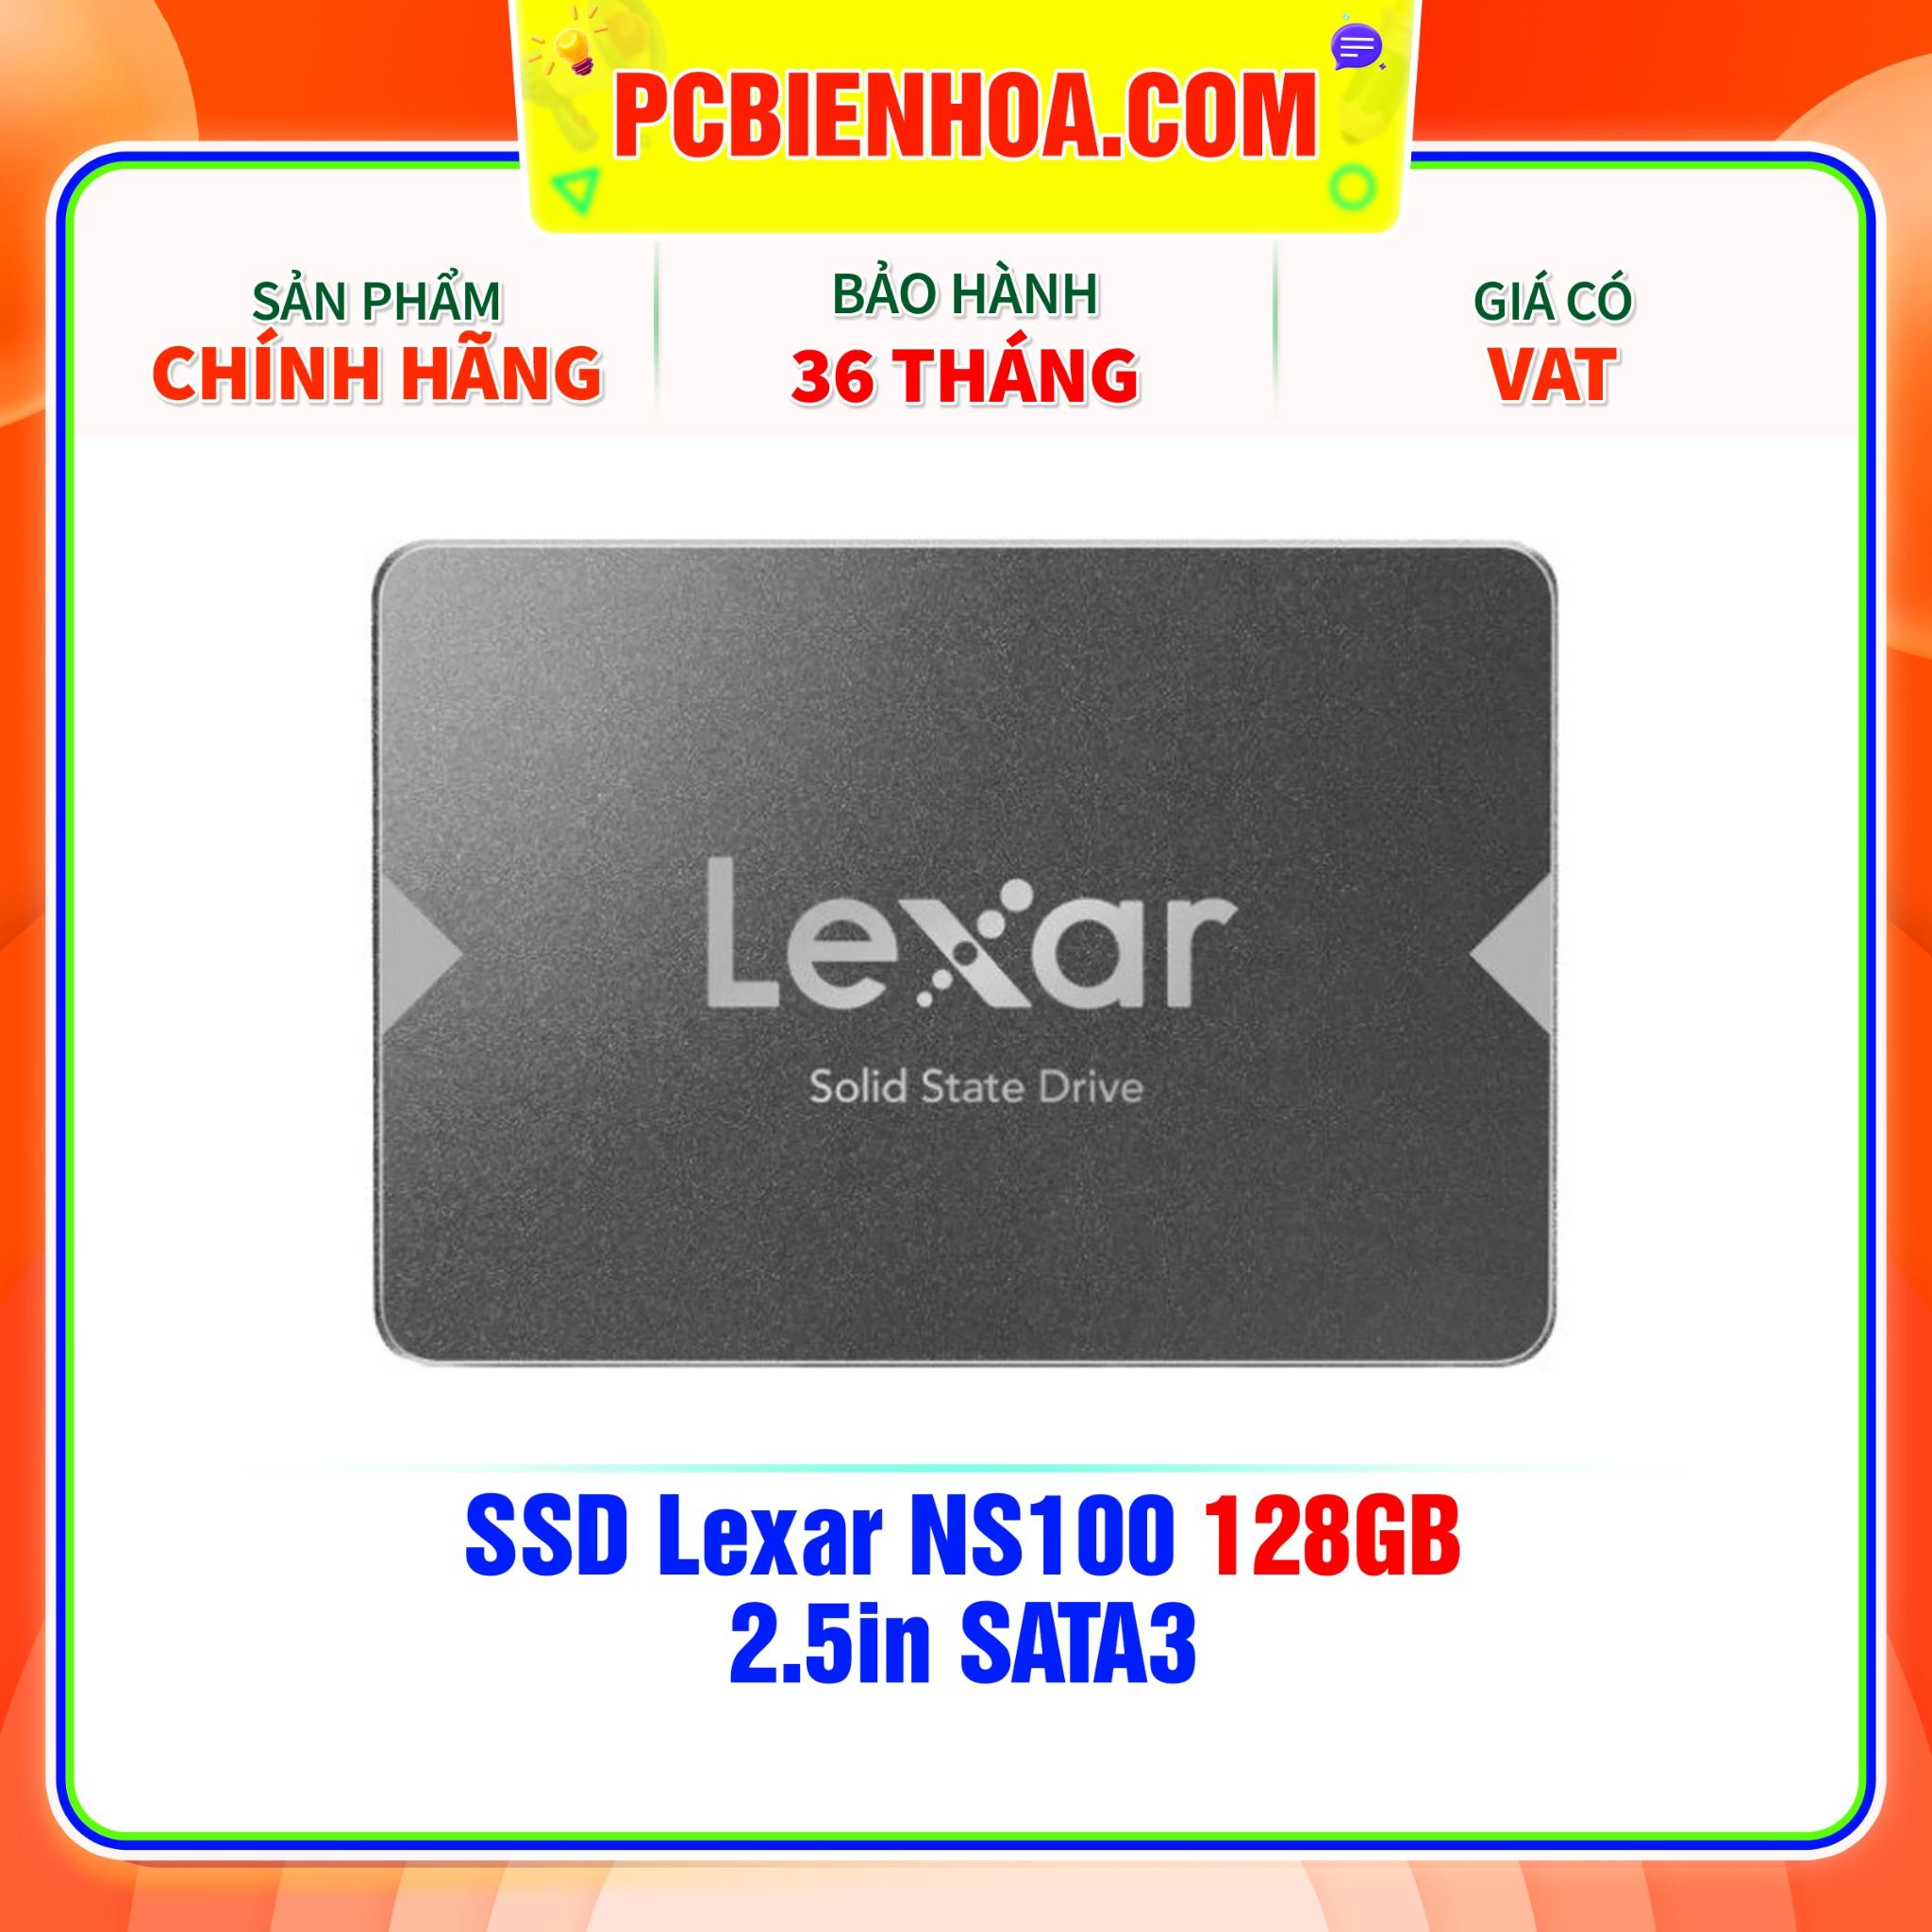  SSD Lexar NS100 128GB - 2.5in SATA3 